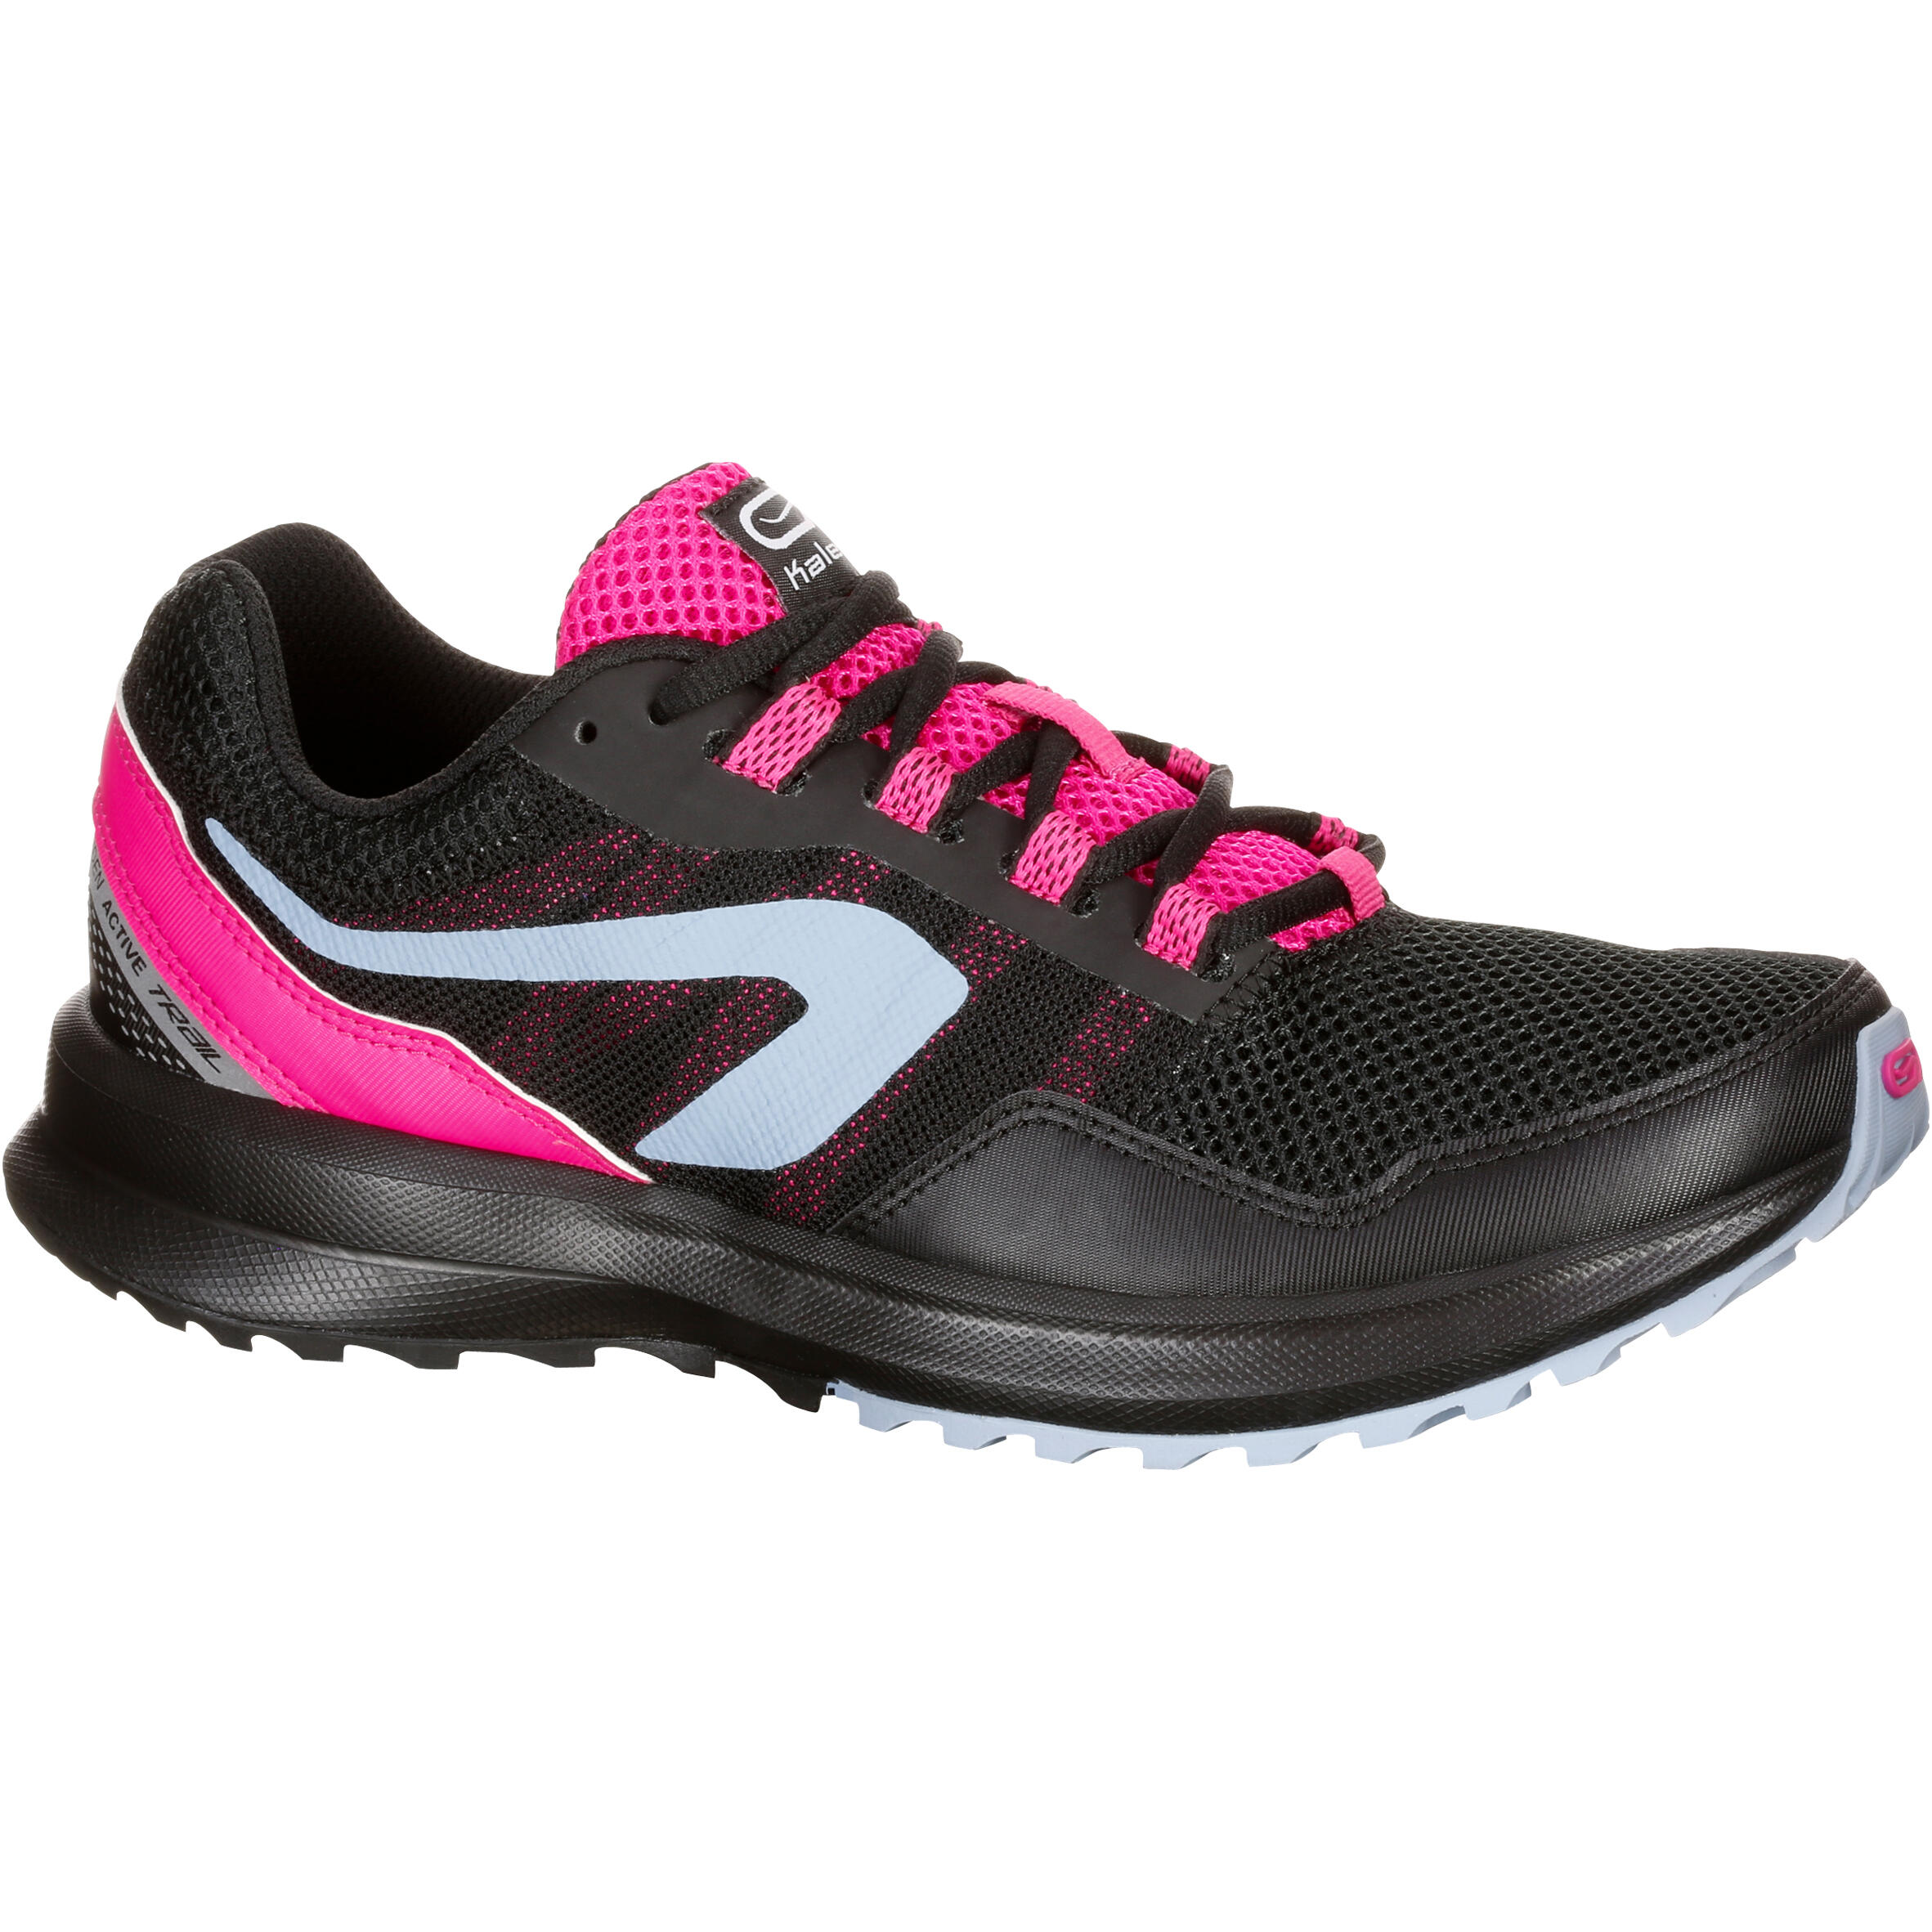 KALENJI Run Active Grip Women's Jogging Shoes - Black Pink